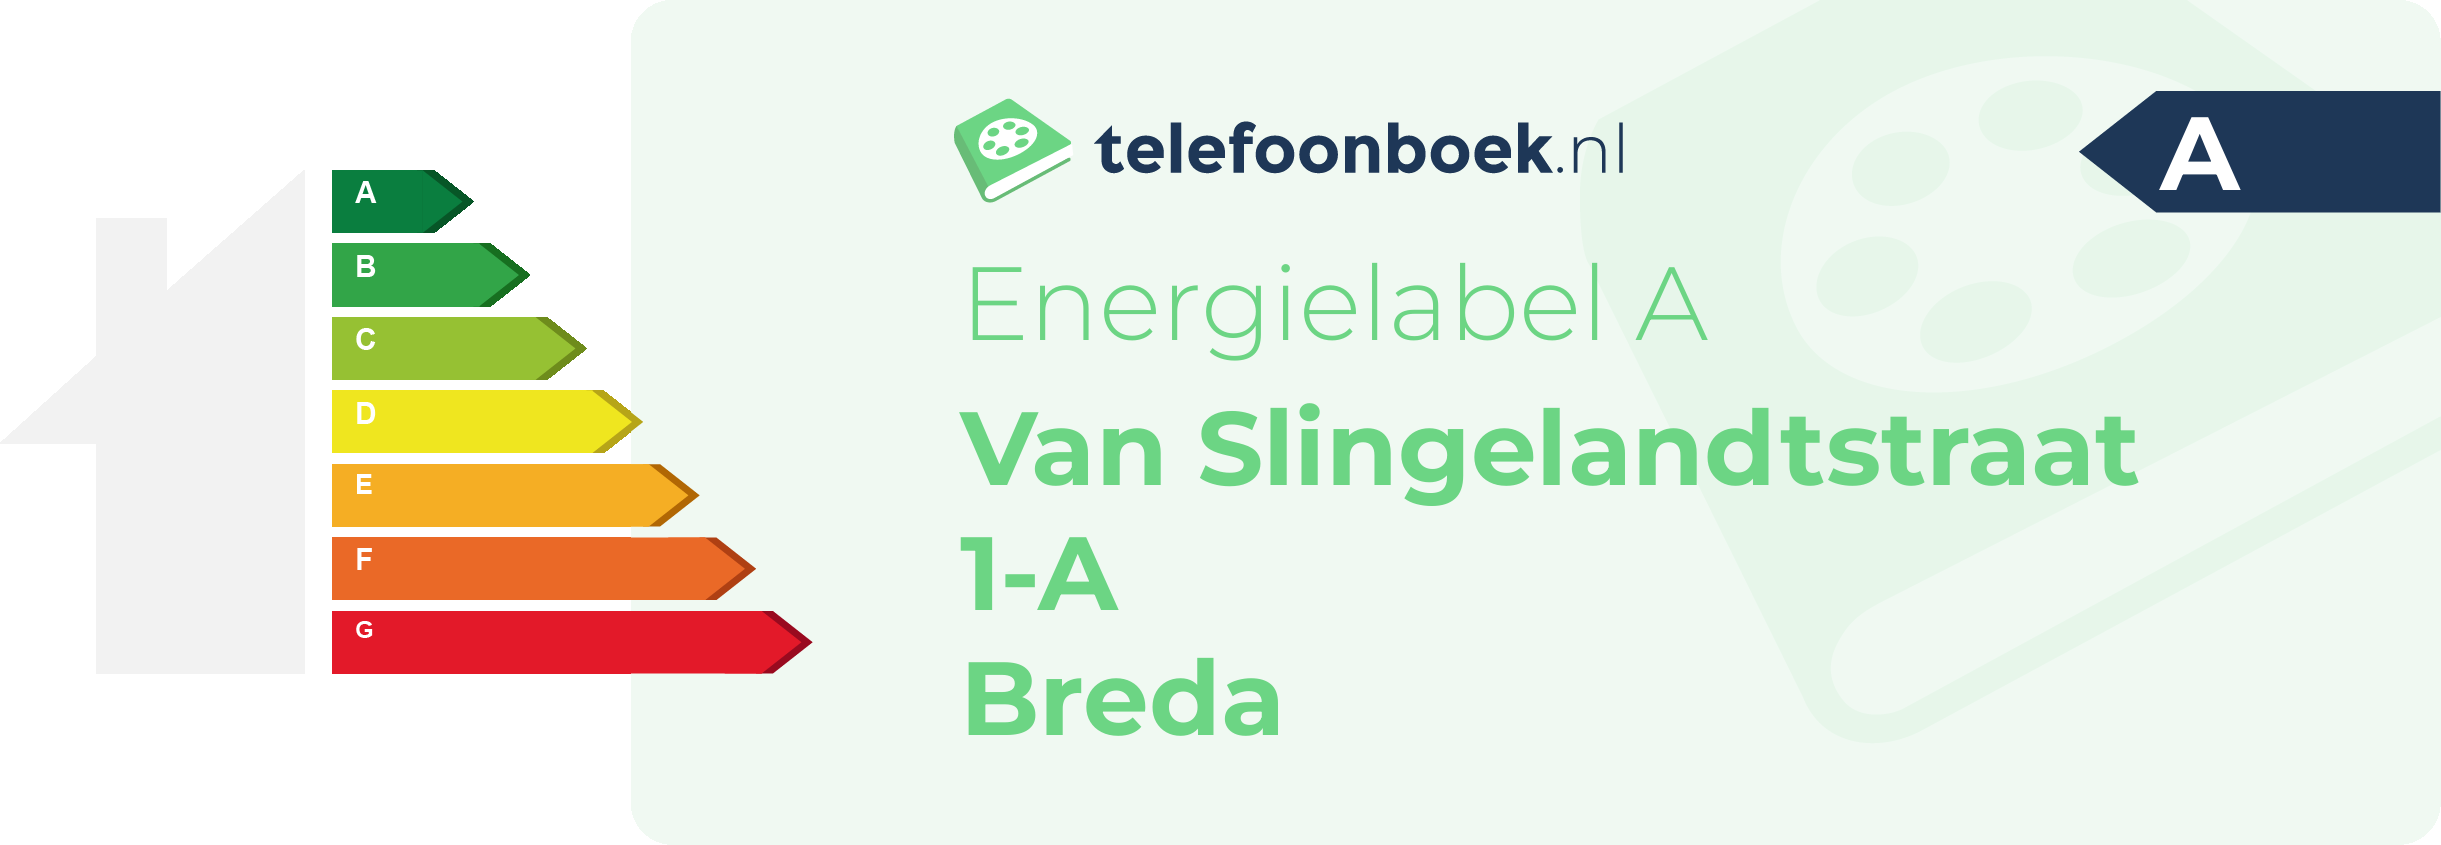 Energielabel Van Slingelandtstraat 1-A Breda